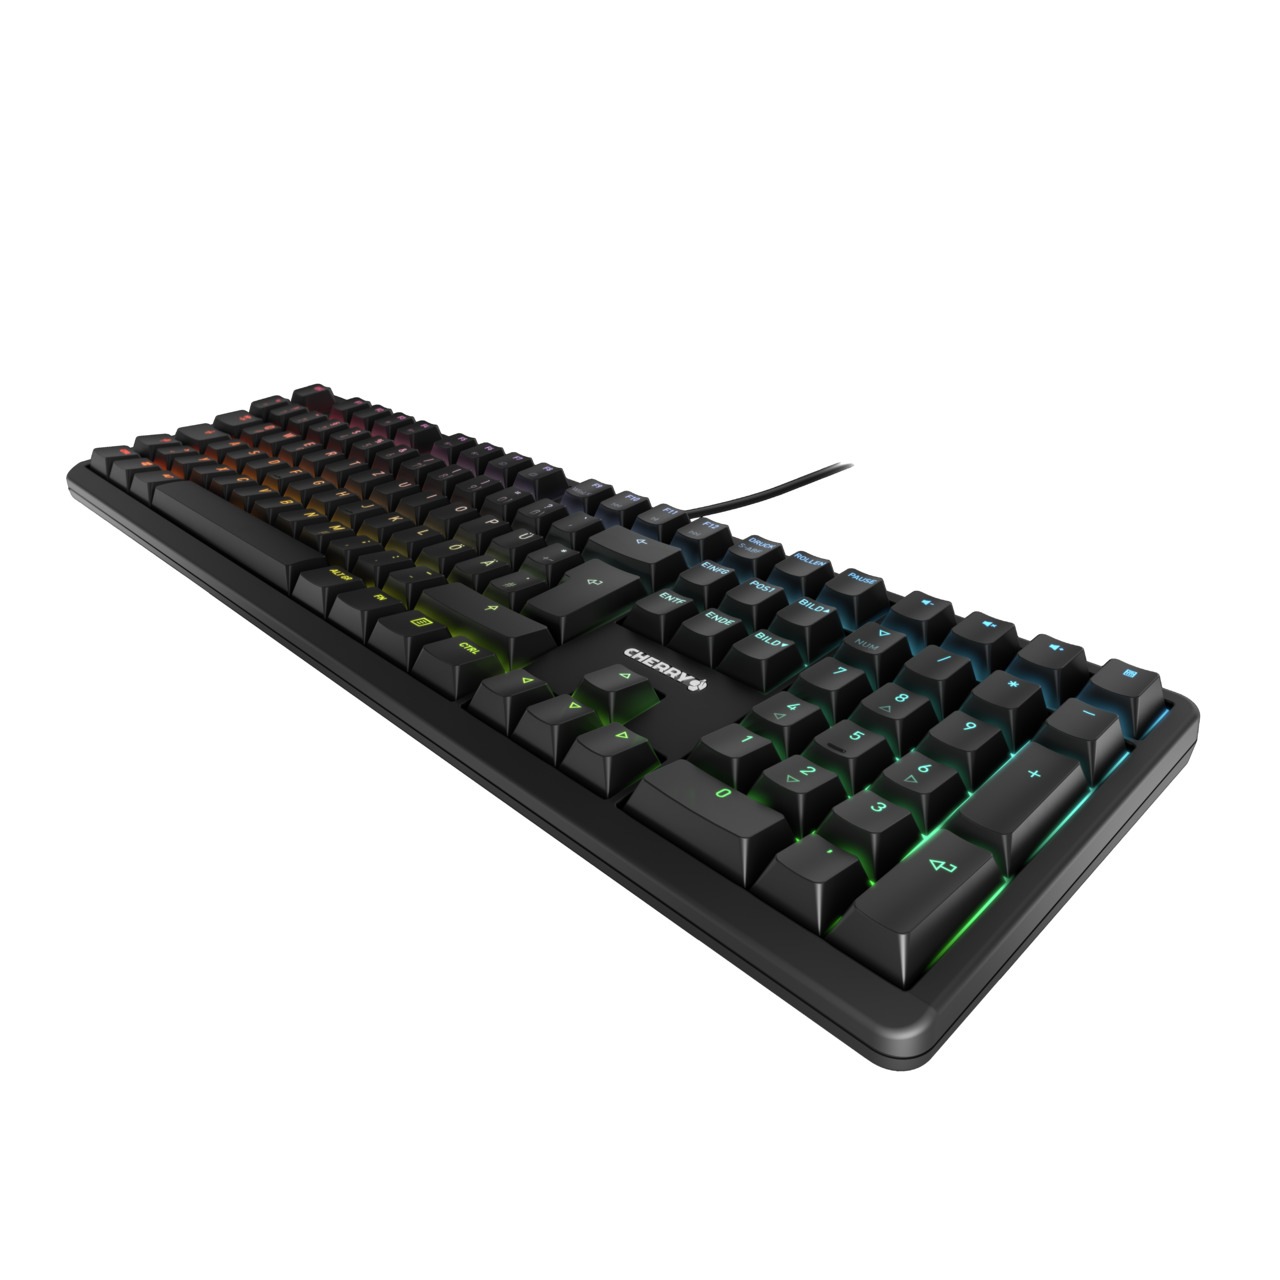 Cherry Gaming-Tastatur »G80-3000N RGB«, MX Red Silent